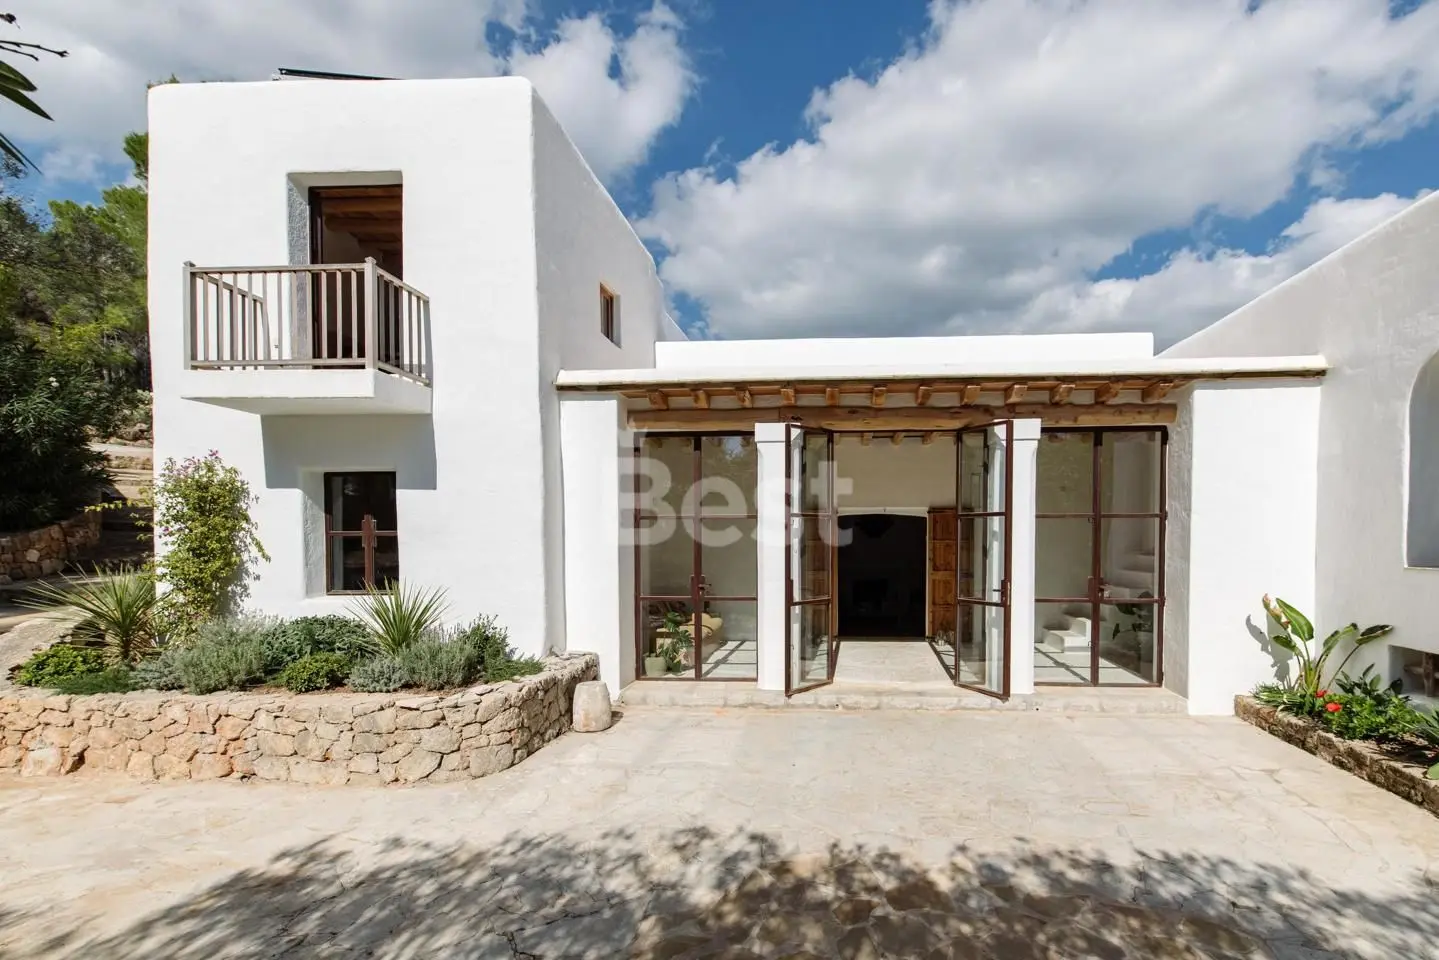 Ibizan house for rent renovated by Blakstad in San Lorenzo, Ibiza. Casa ibicenca en alquiler reformada por Blakstad